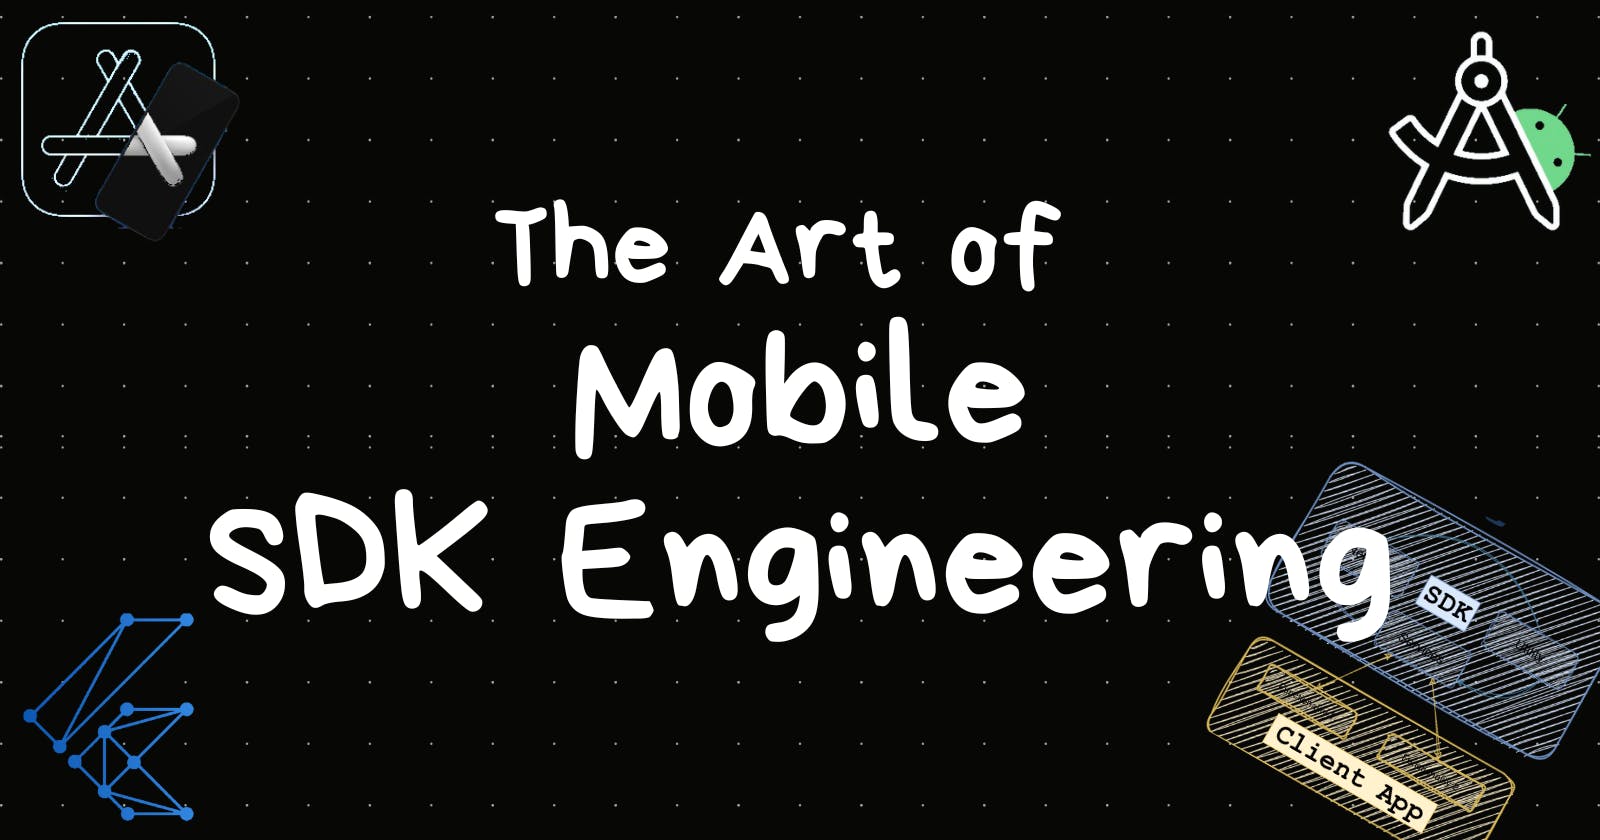 The Art of Mobile SDK Engineering